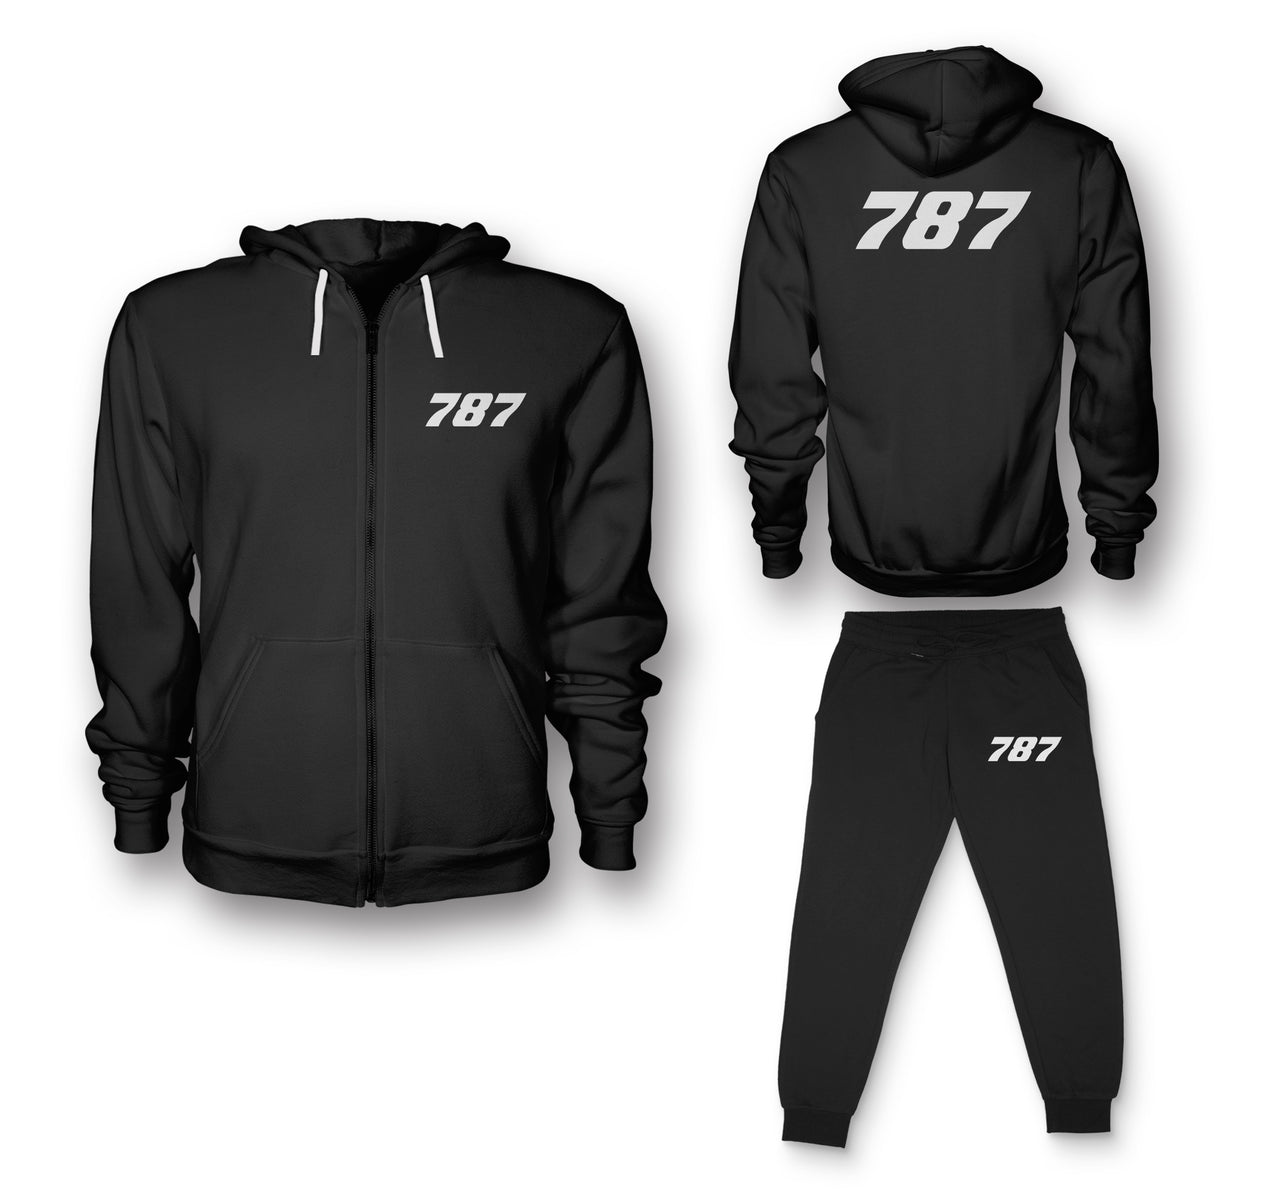 787 Flat Text Designed Zipped Hoodies & Sweatpants Set